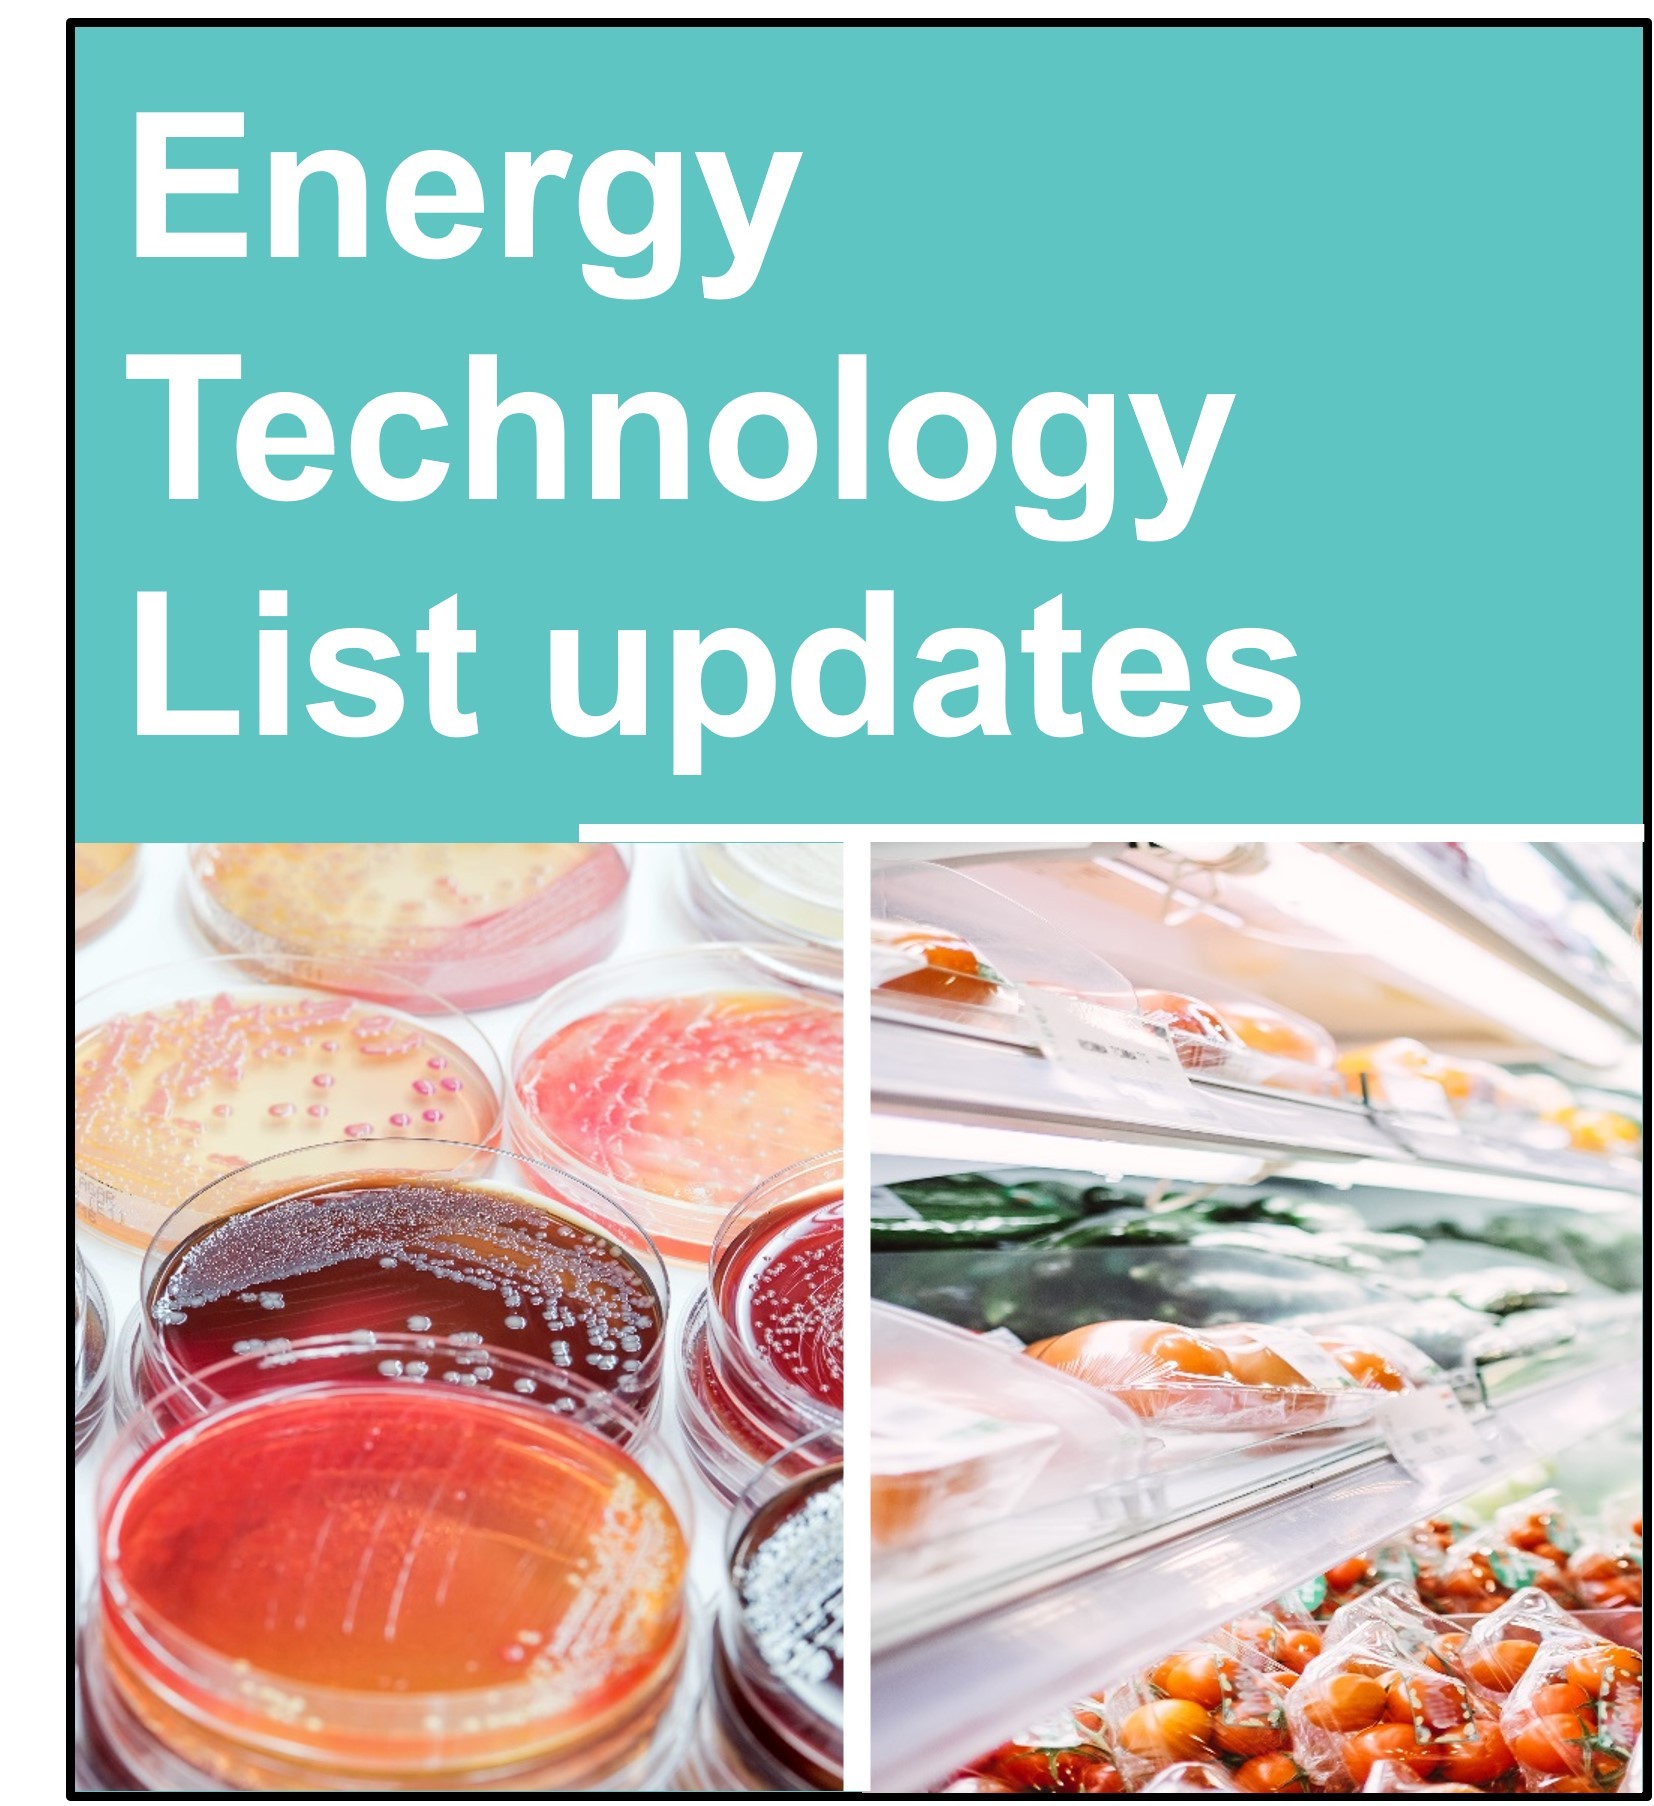 Energy Technology List updates